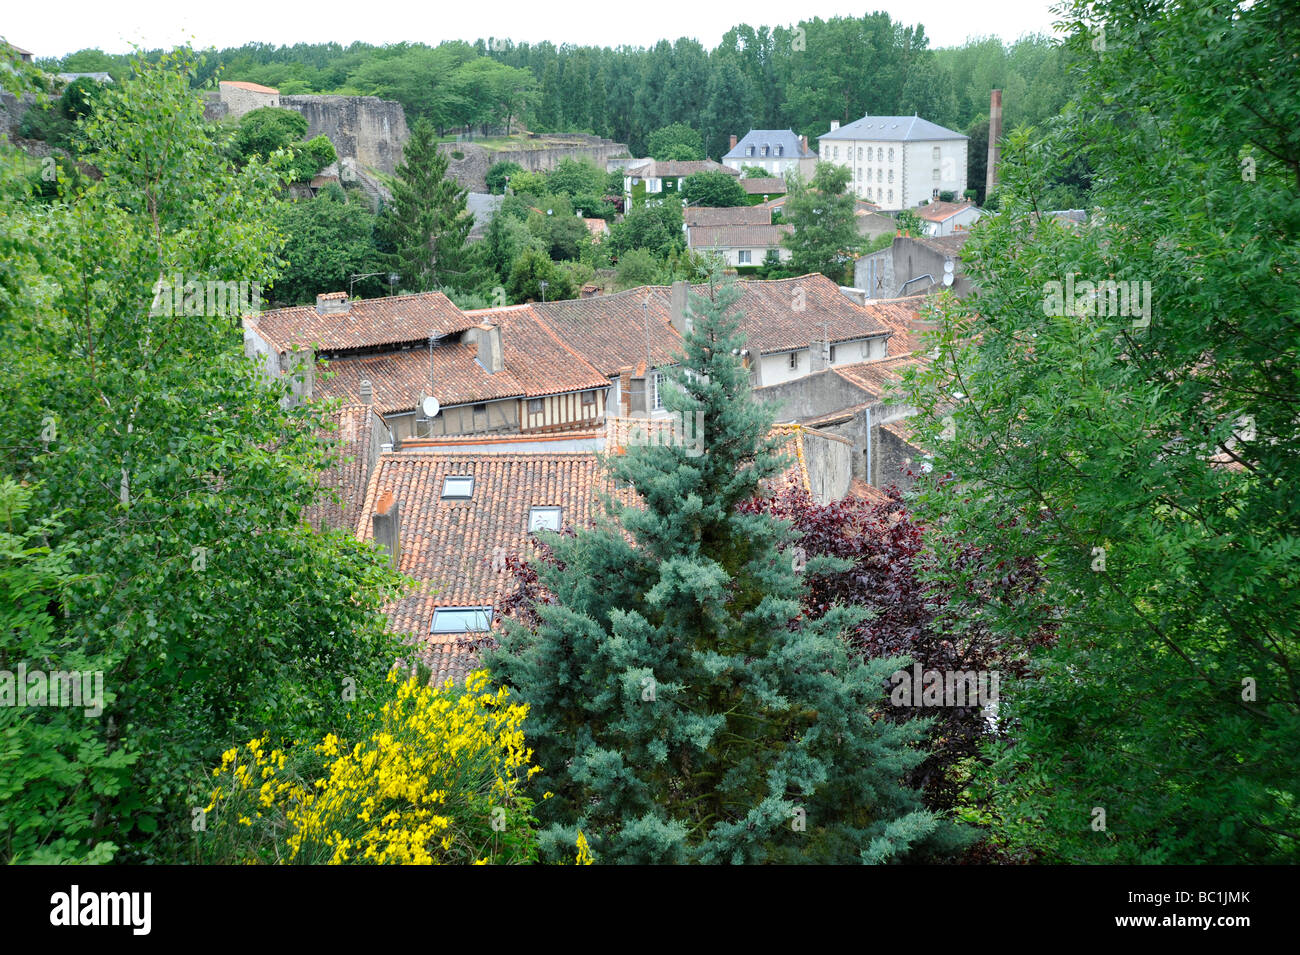 La città medievale di Parthenay, Deux-Sevres, Francia. Foto Stock